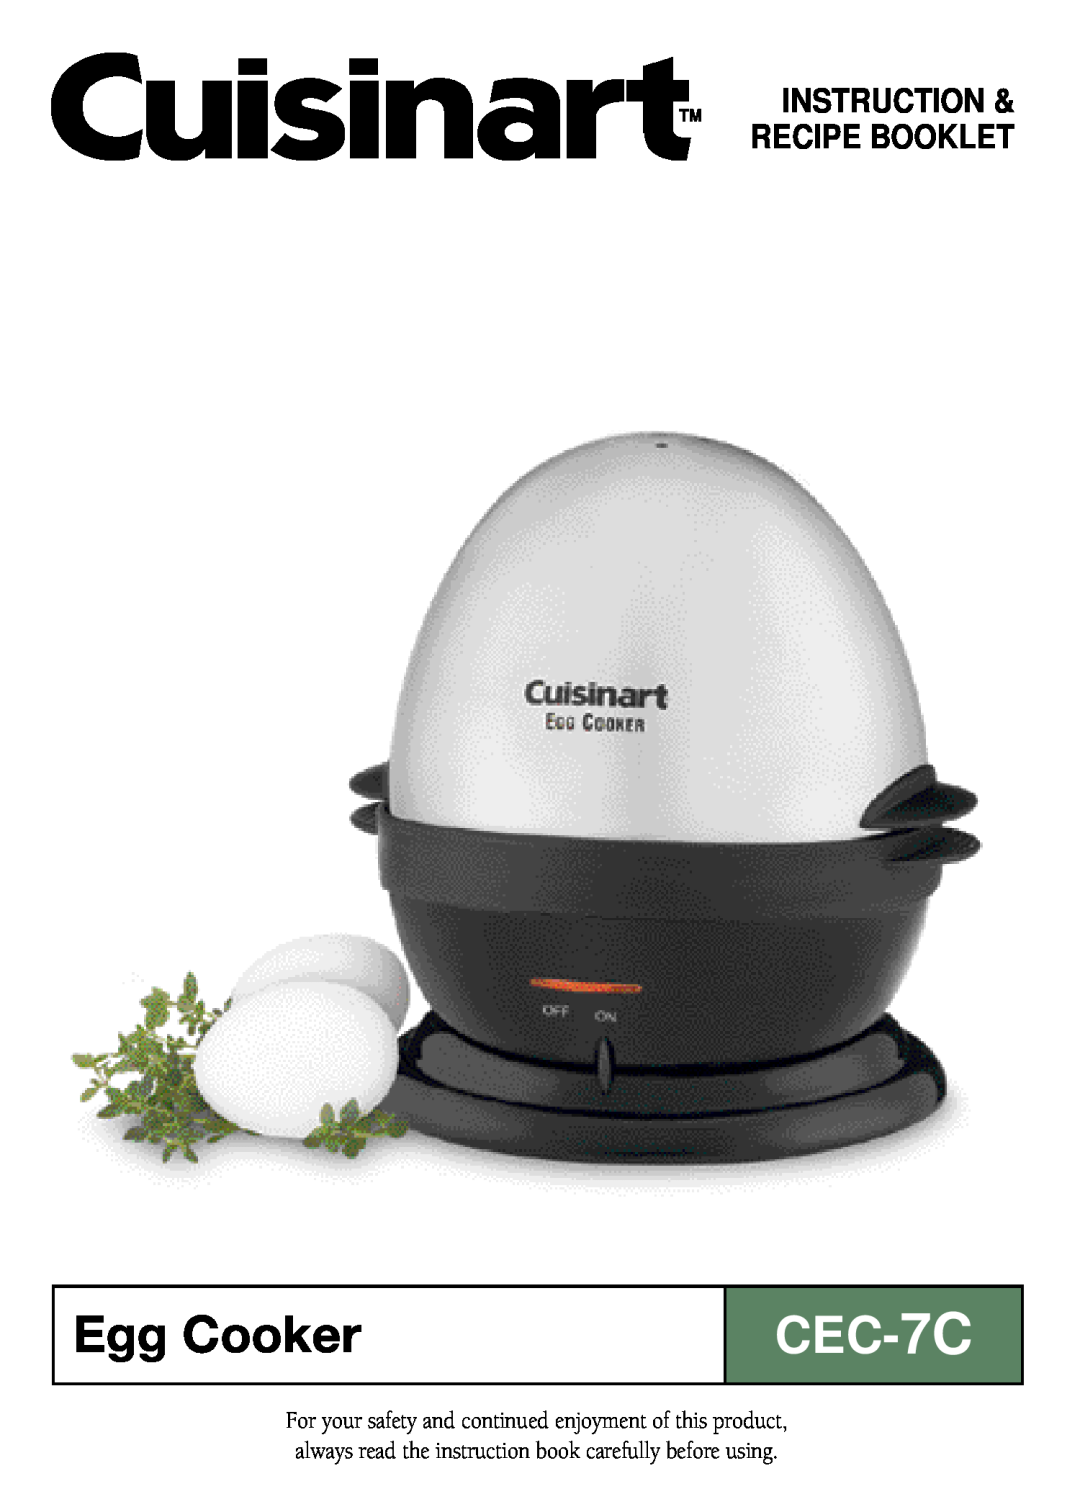 Cuisinart CEC-7C manual Egg Cooker, CEC- 7C, Instruction Recipe Booklet 